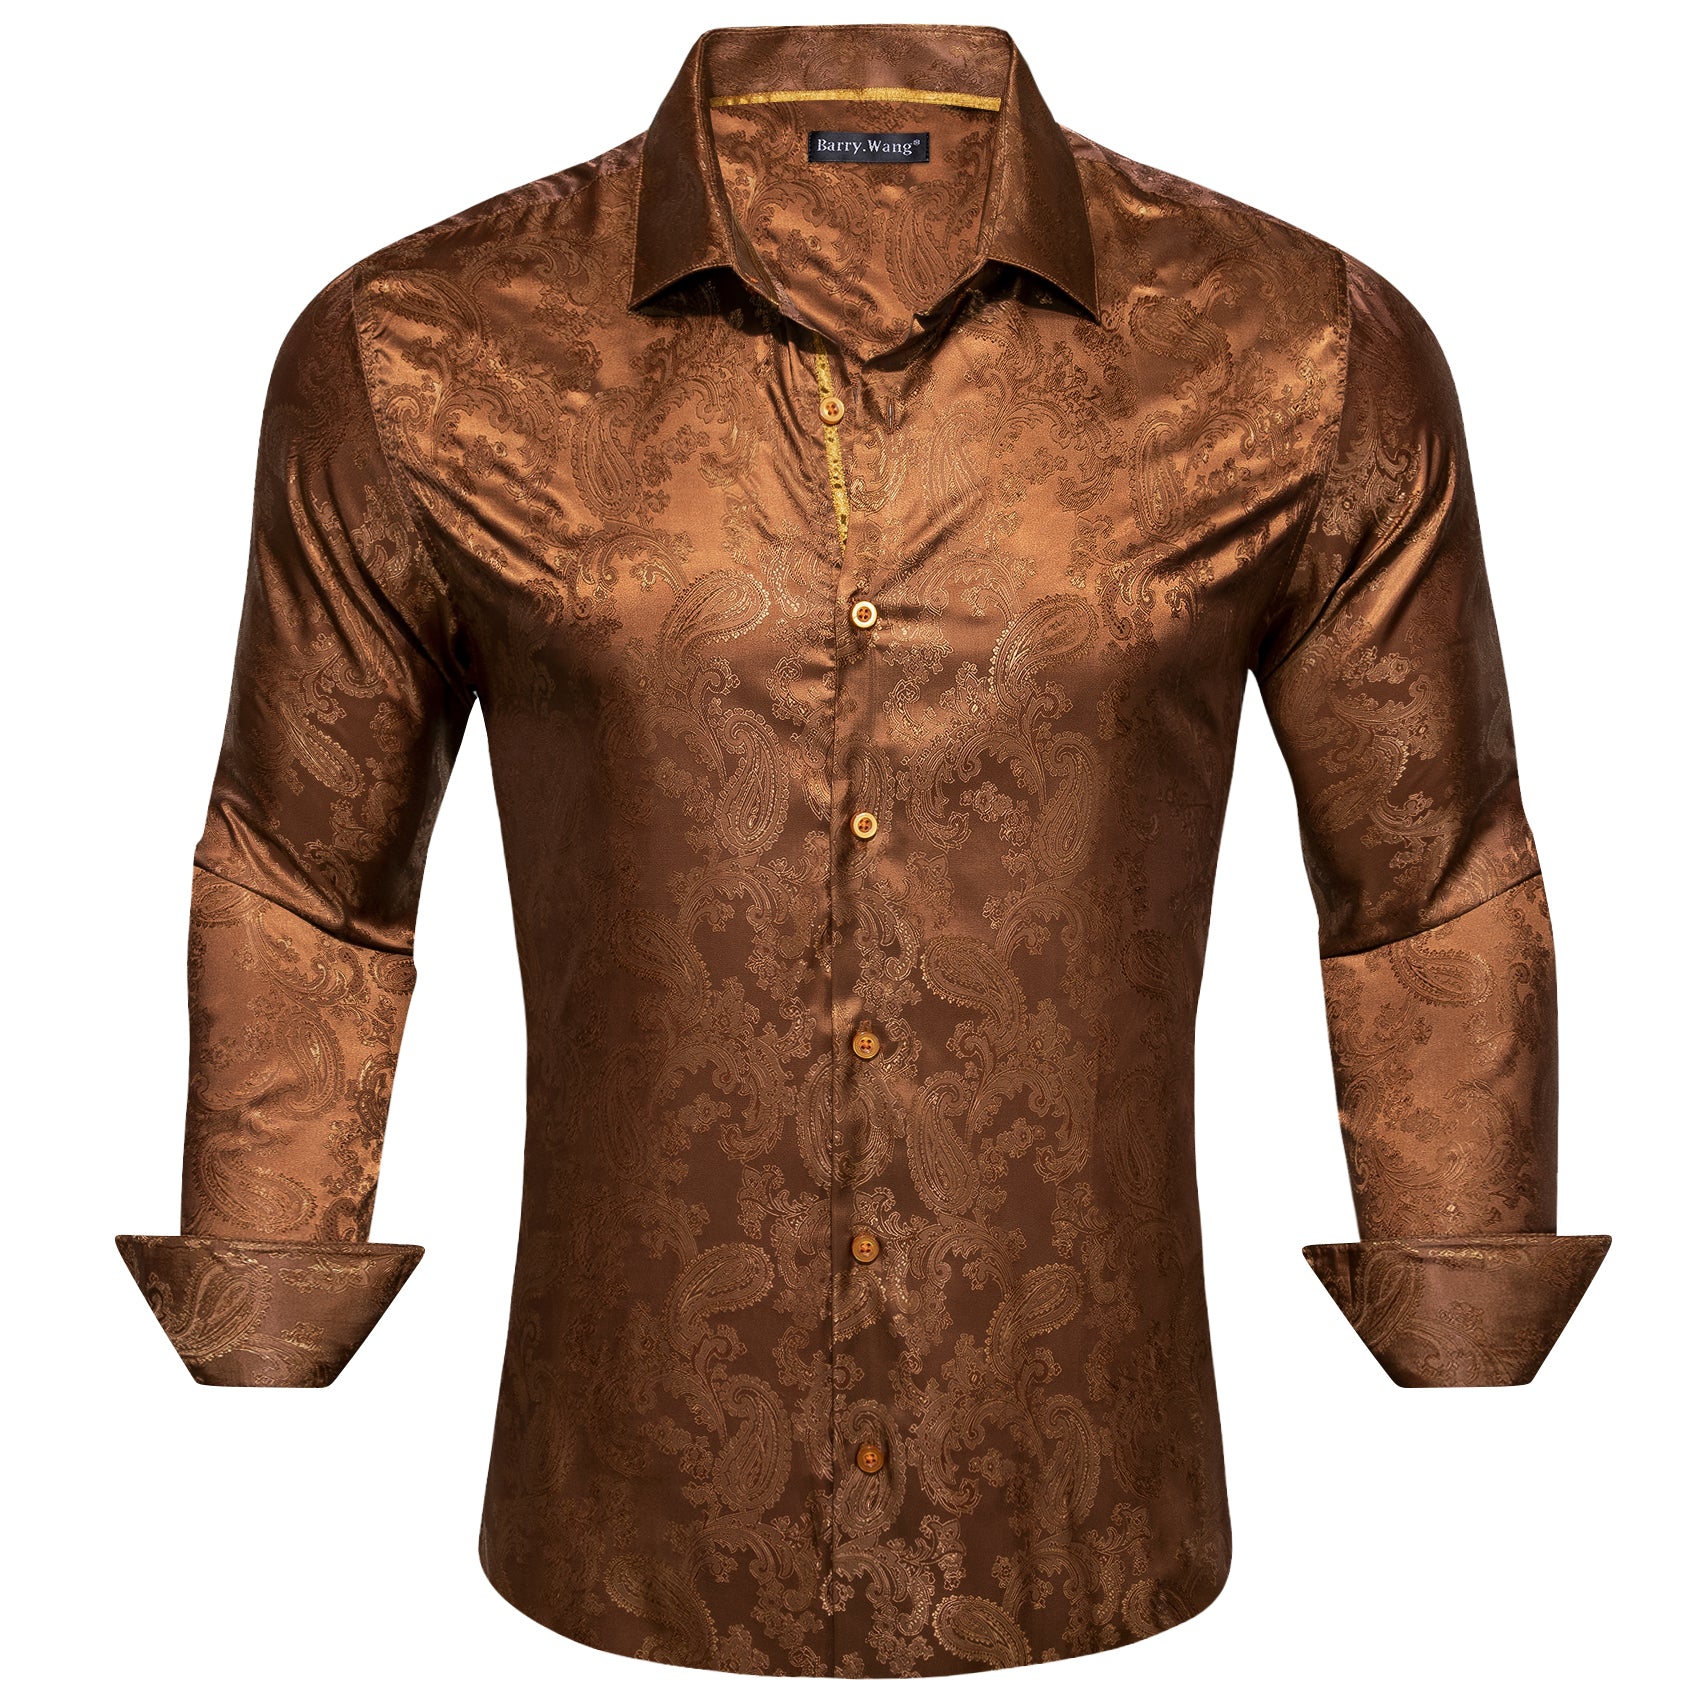 Barry.wang Button Down Shirt Brown Paisley Silk Men's Long Sleeve Shirt